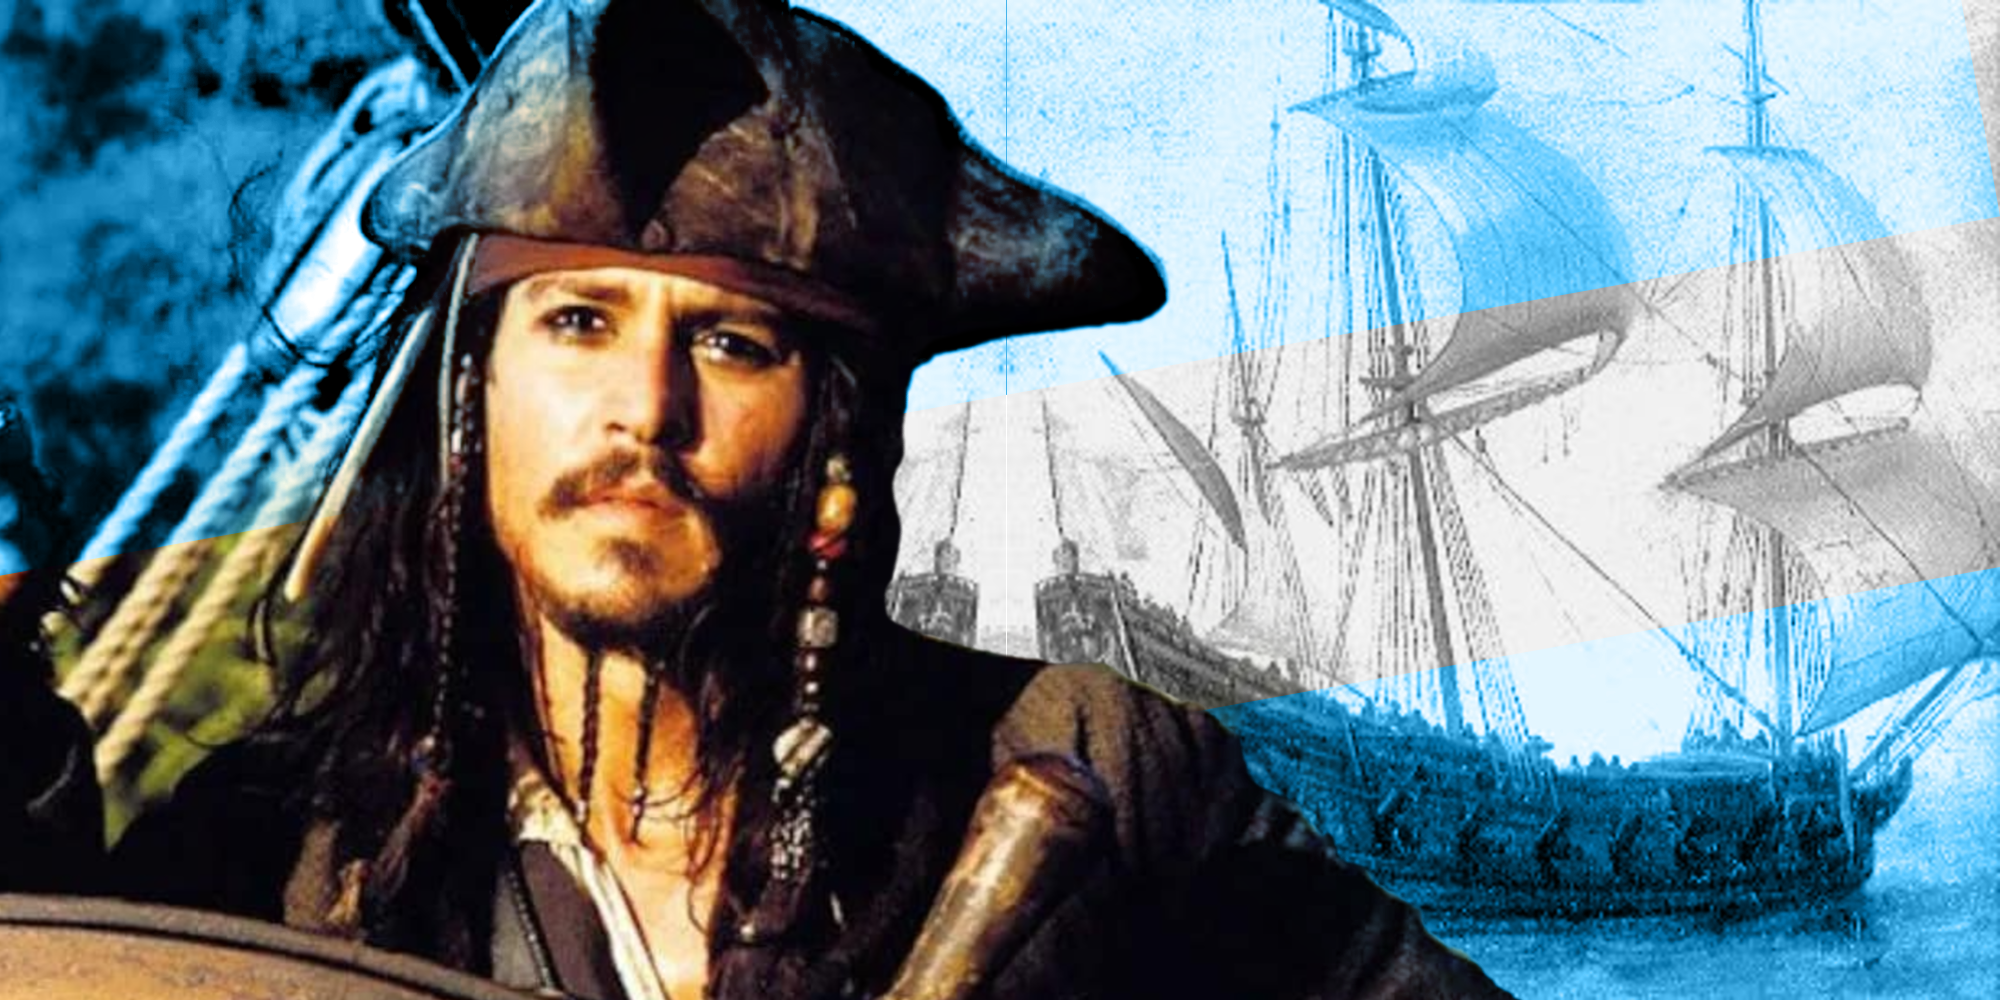 Будут ли пираты карибского 6. Пираты Карибского моря 6 Джек Воробей. Джек Уорд пират. Джек Уорд из пираты Карибского моря.